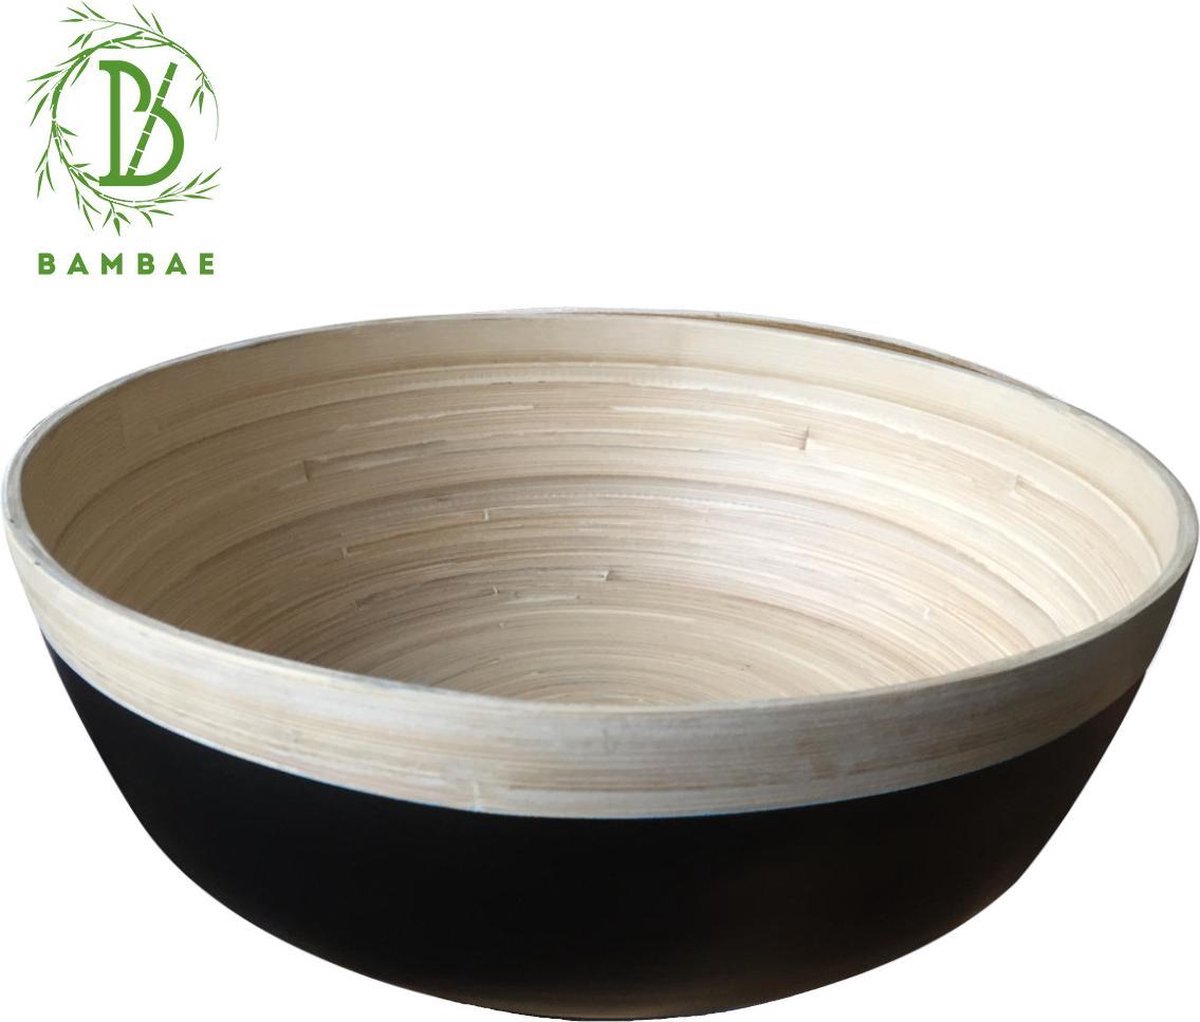 Bambae - Slakom XL - Bamboe - Zwart - 30cm diameter - Bambae